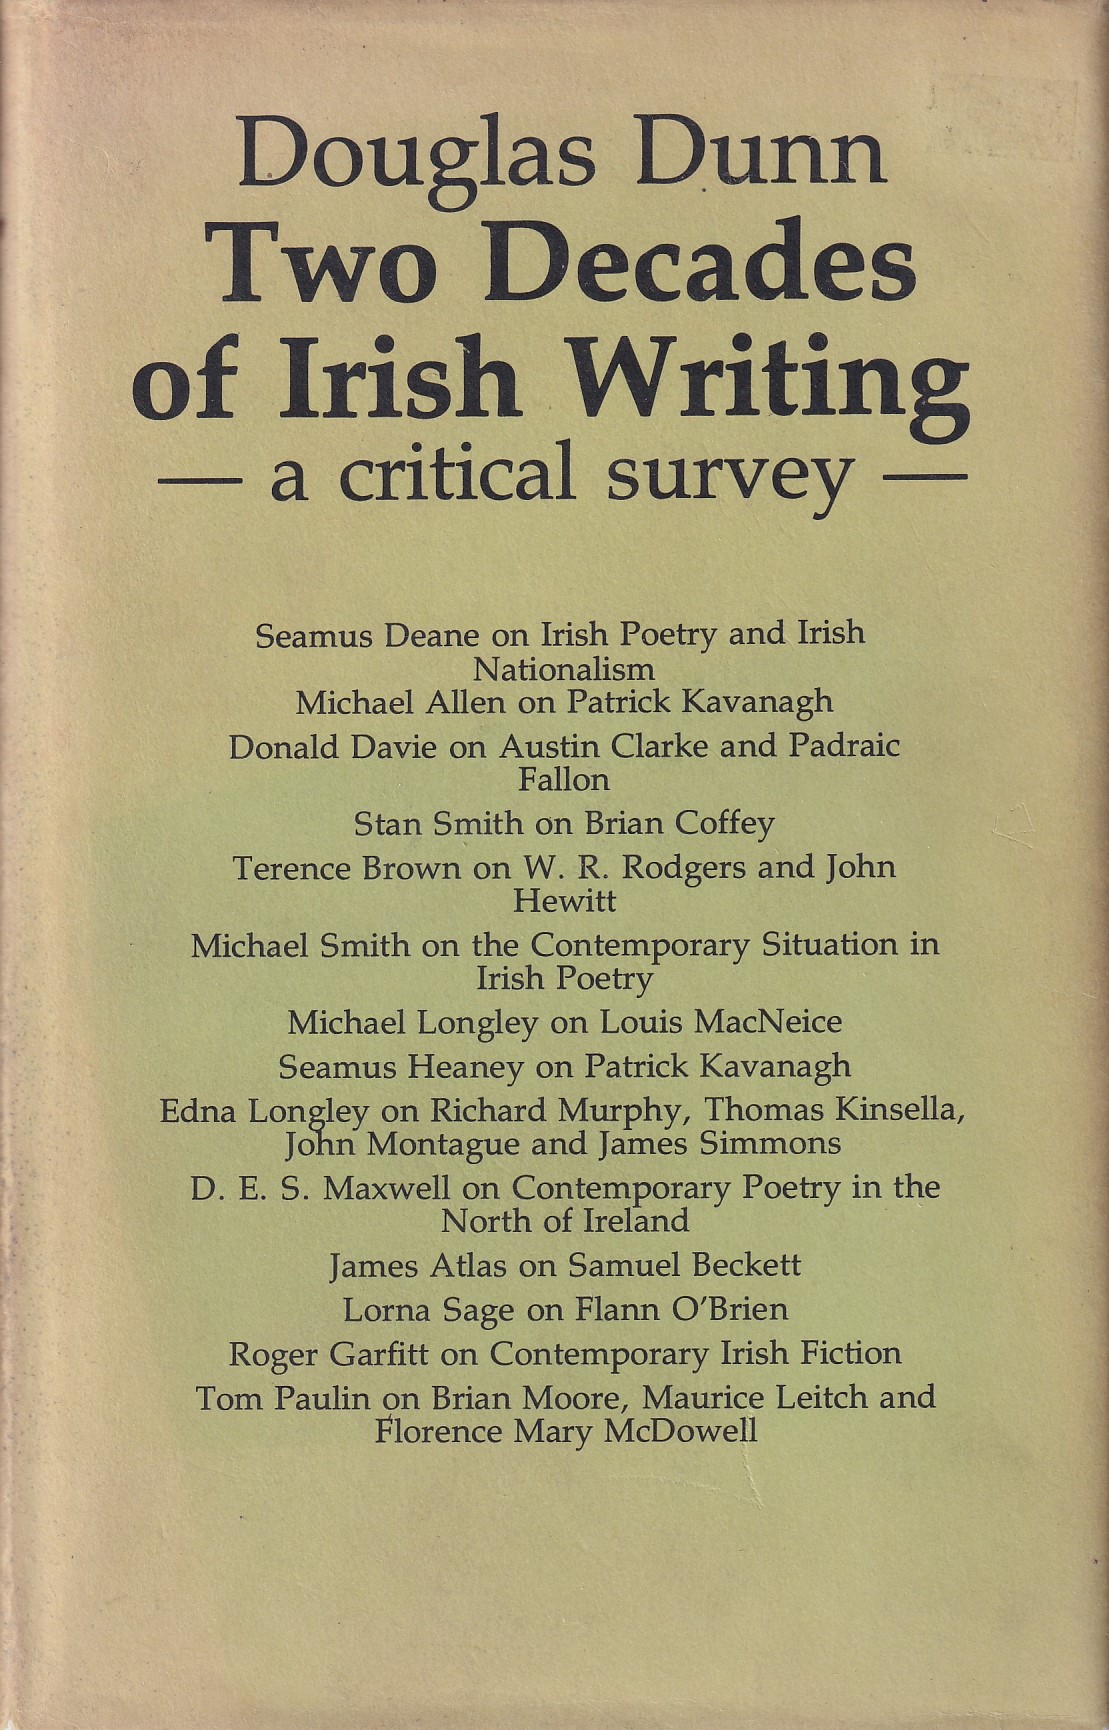 Two Decades of Irish Writing: A Critical Survey | Douglas Dunn | Charlie Byrne's